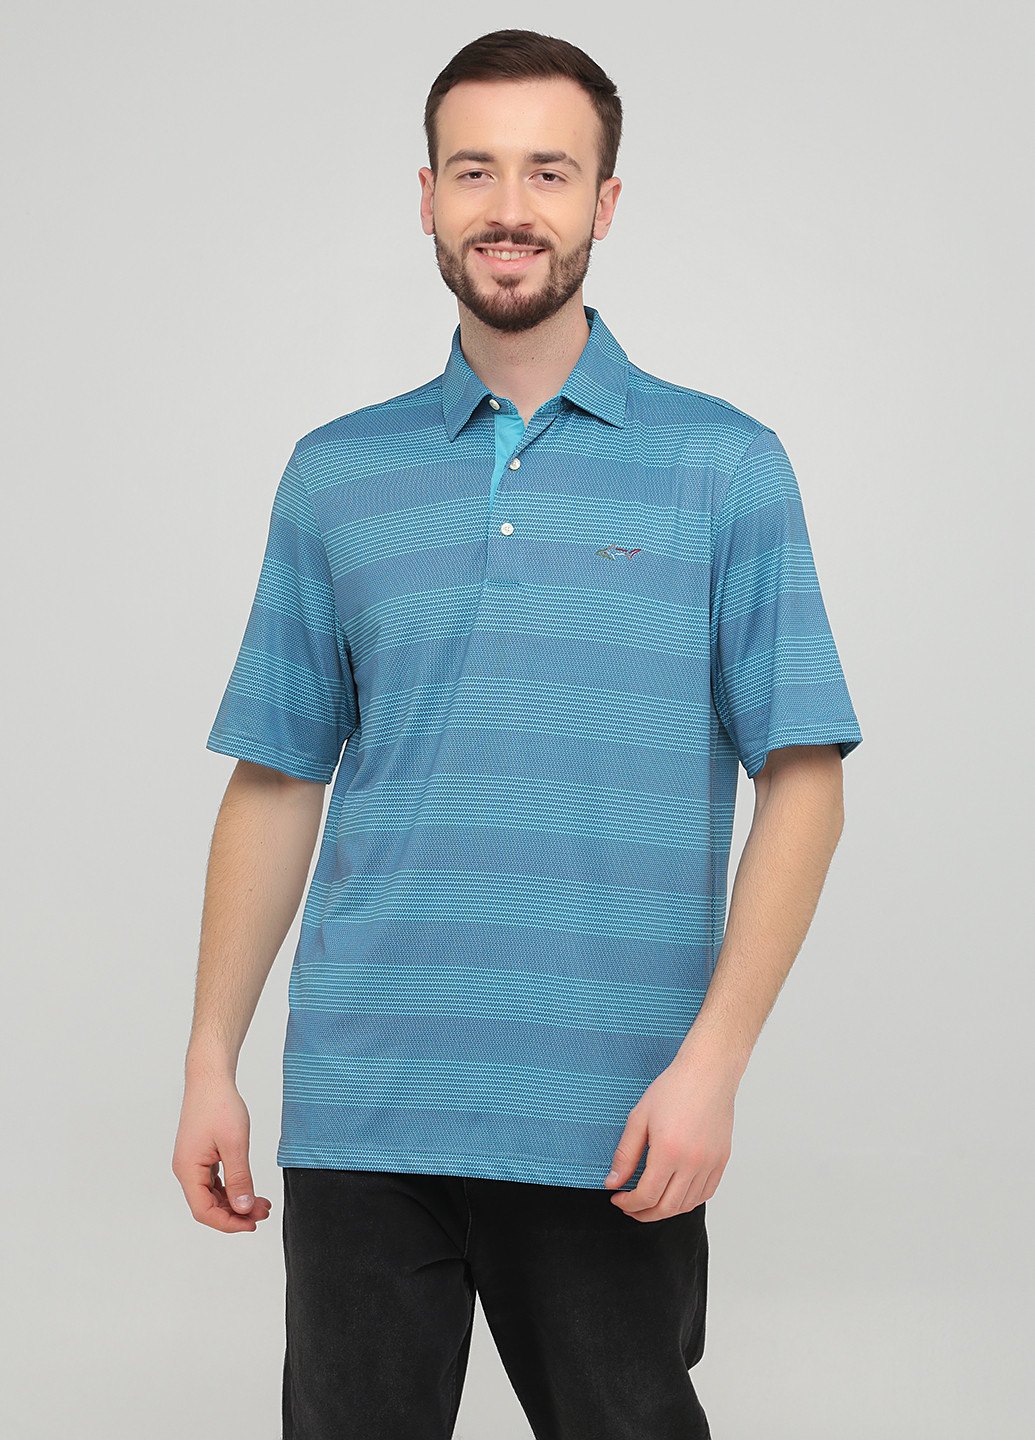 Голубой футболка-поло для мужчин Greg Norman с геометрическим узором